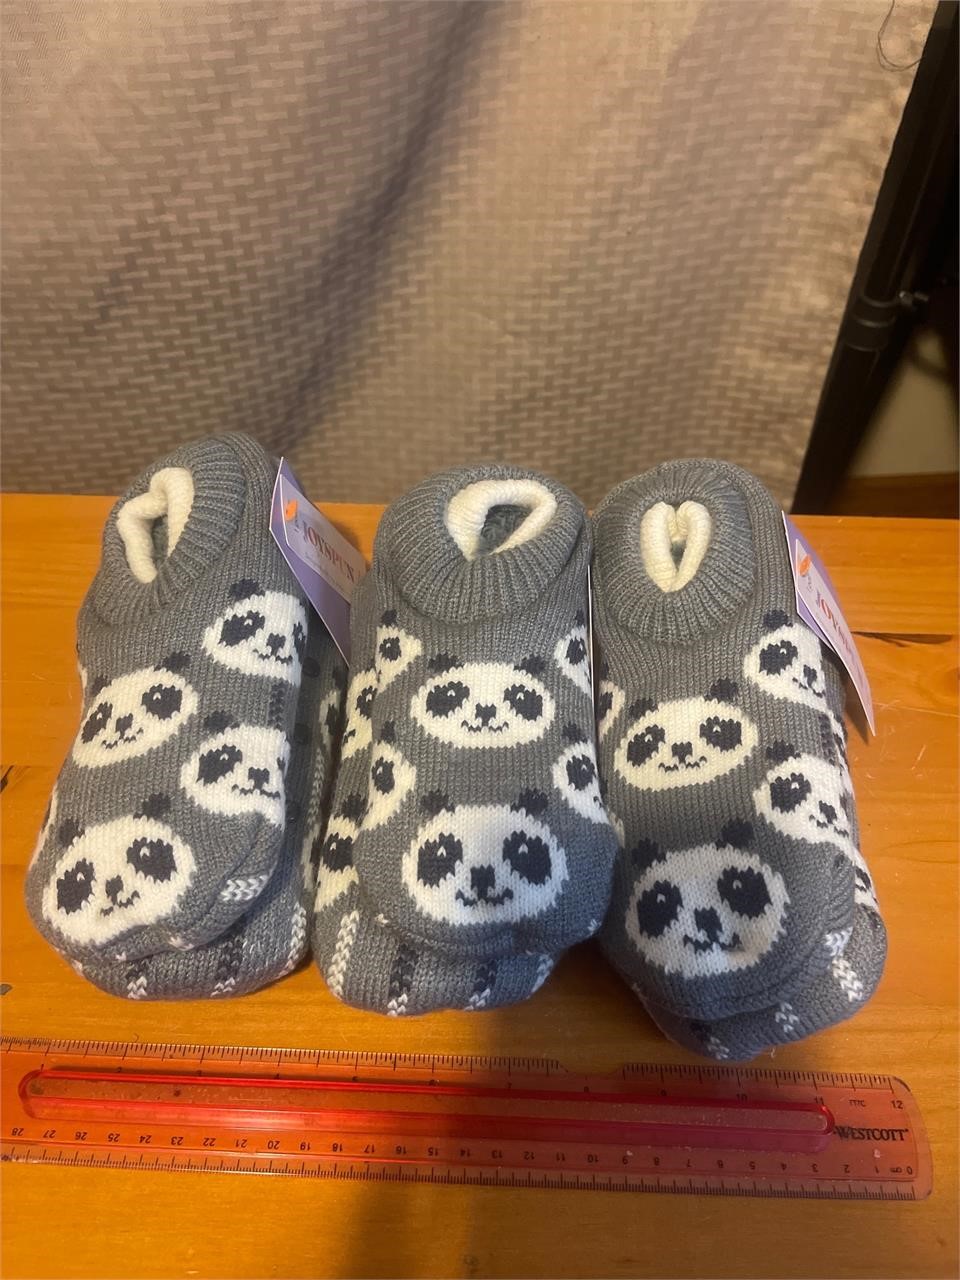 3 new pairs Joyspun women’s slipper socks 4-10